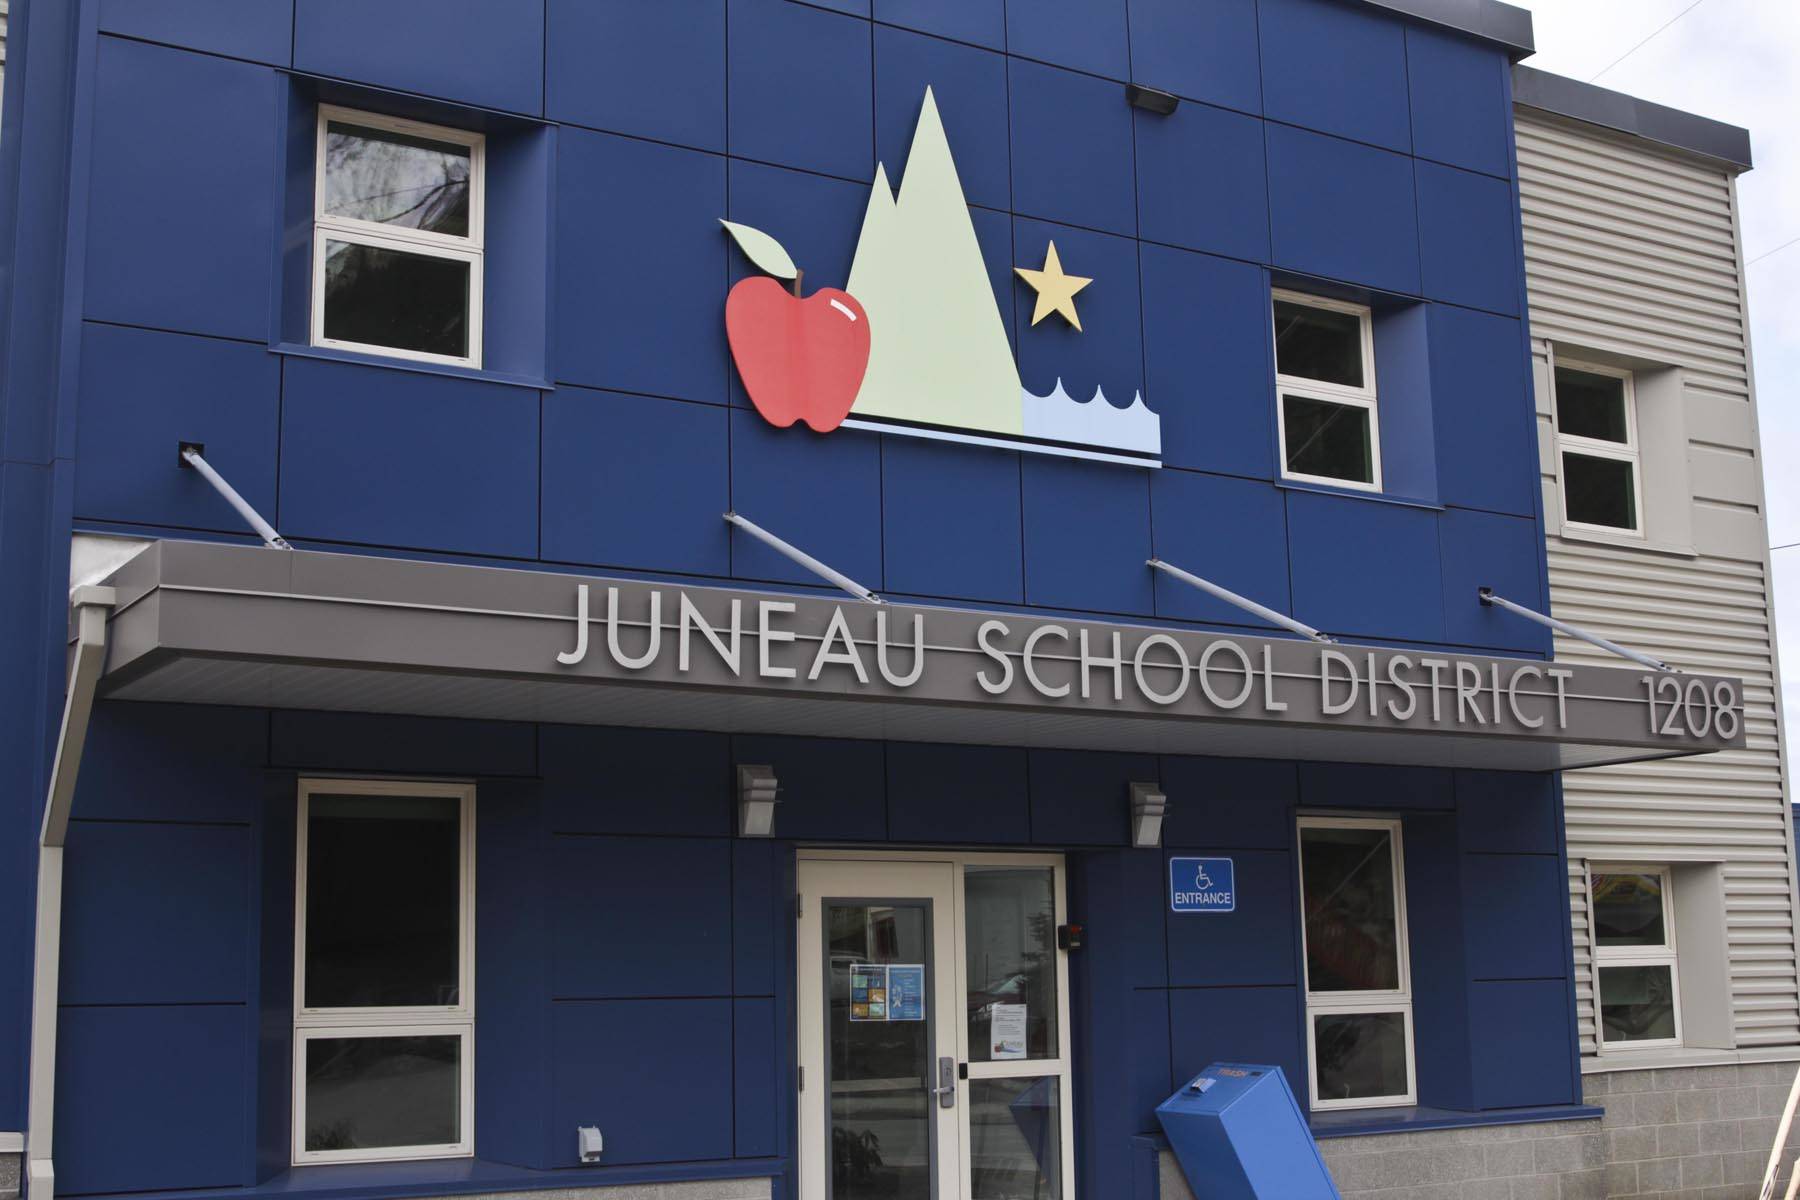 The Juneau School District building, March 20, 2020. (Michael S. Lockett/ Juneau Empire)